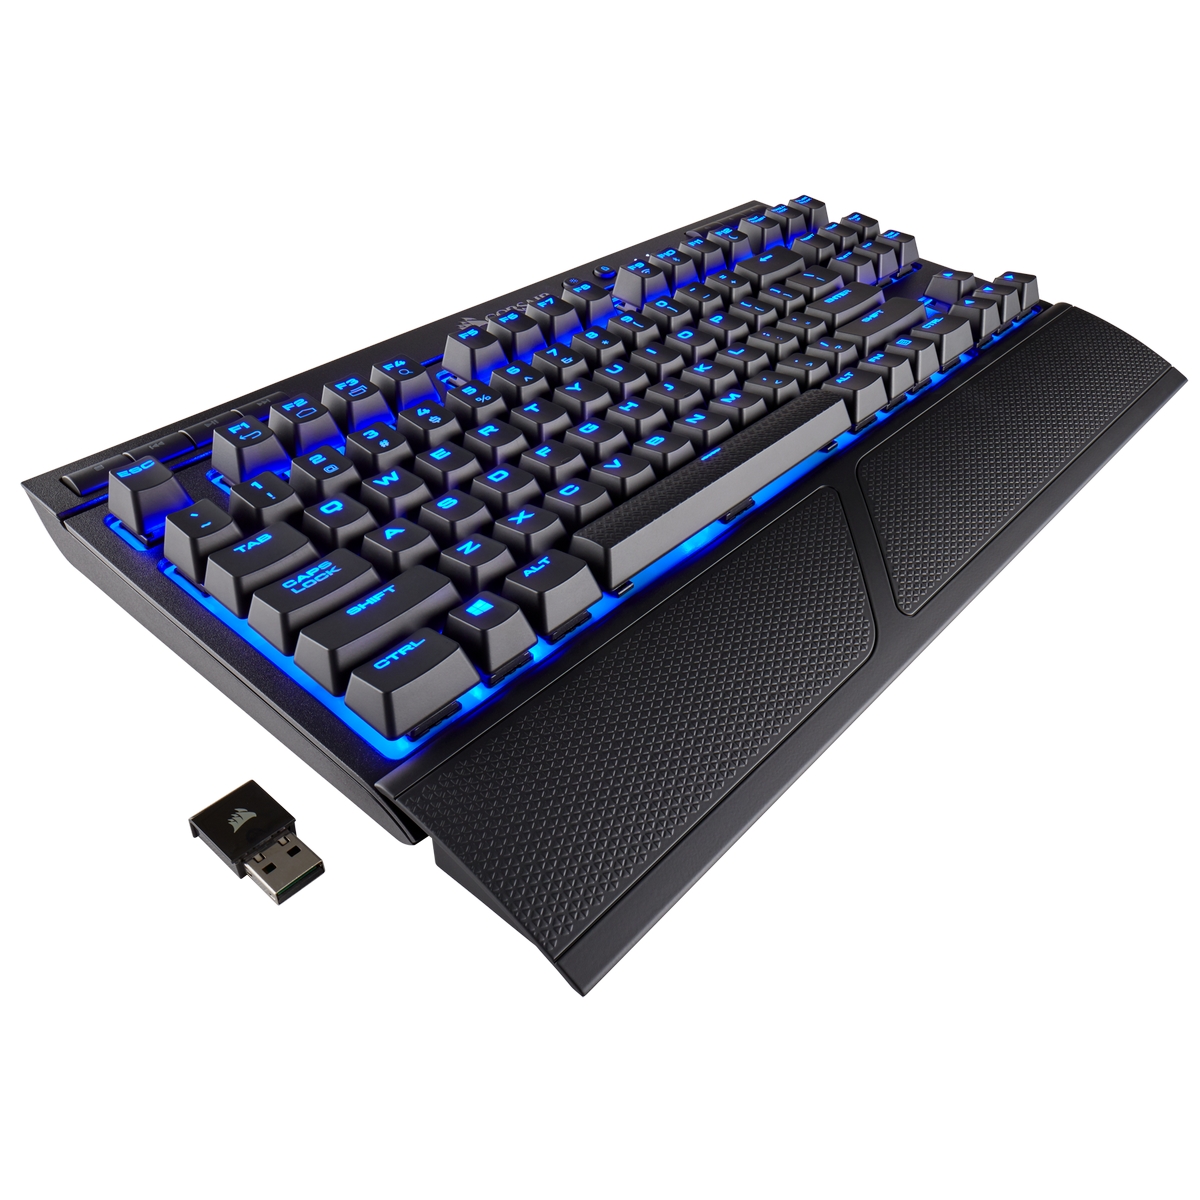 Corsair K63 Wireless Mechanical Gaming Keyboard, Backlit Blue LED, Cherry MX Red (CH-9145030-UK)